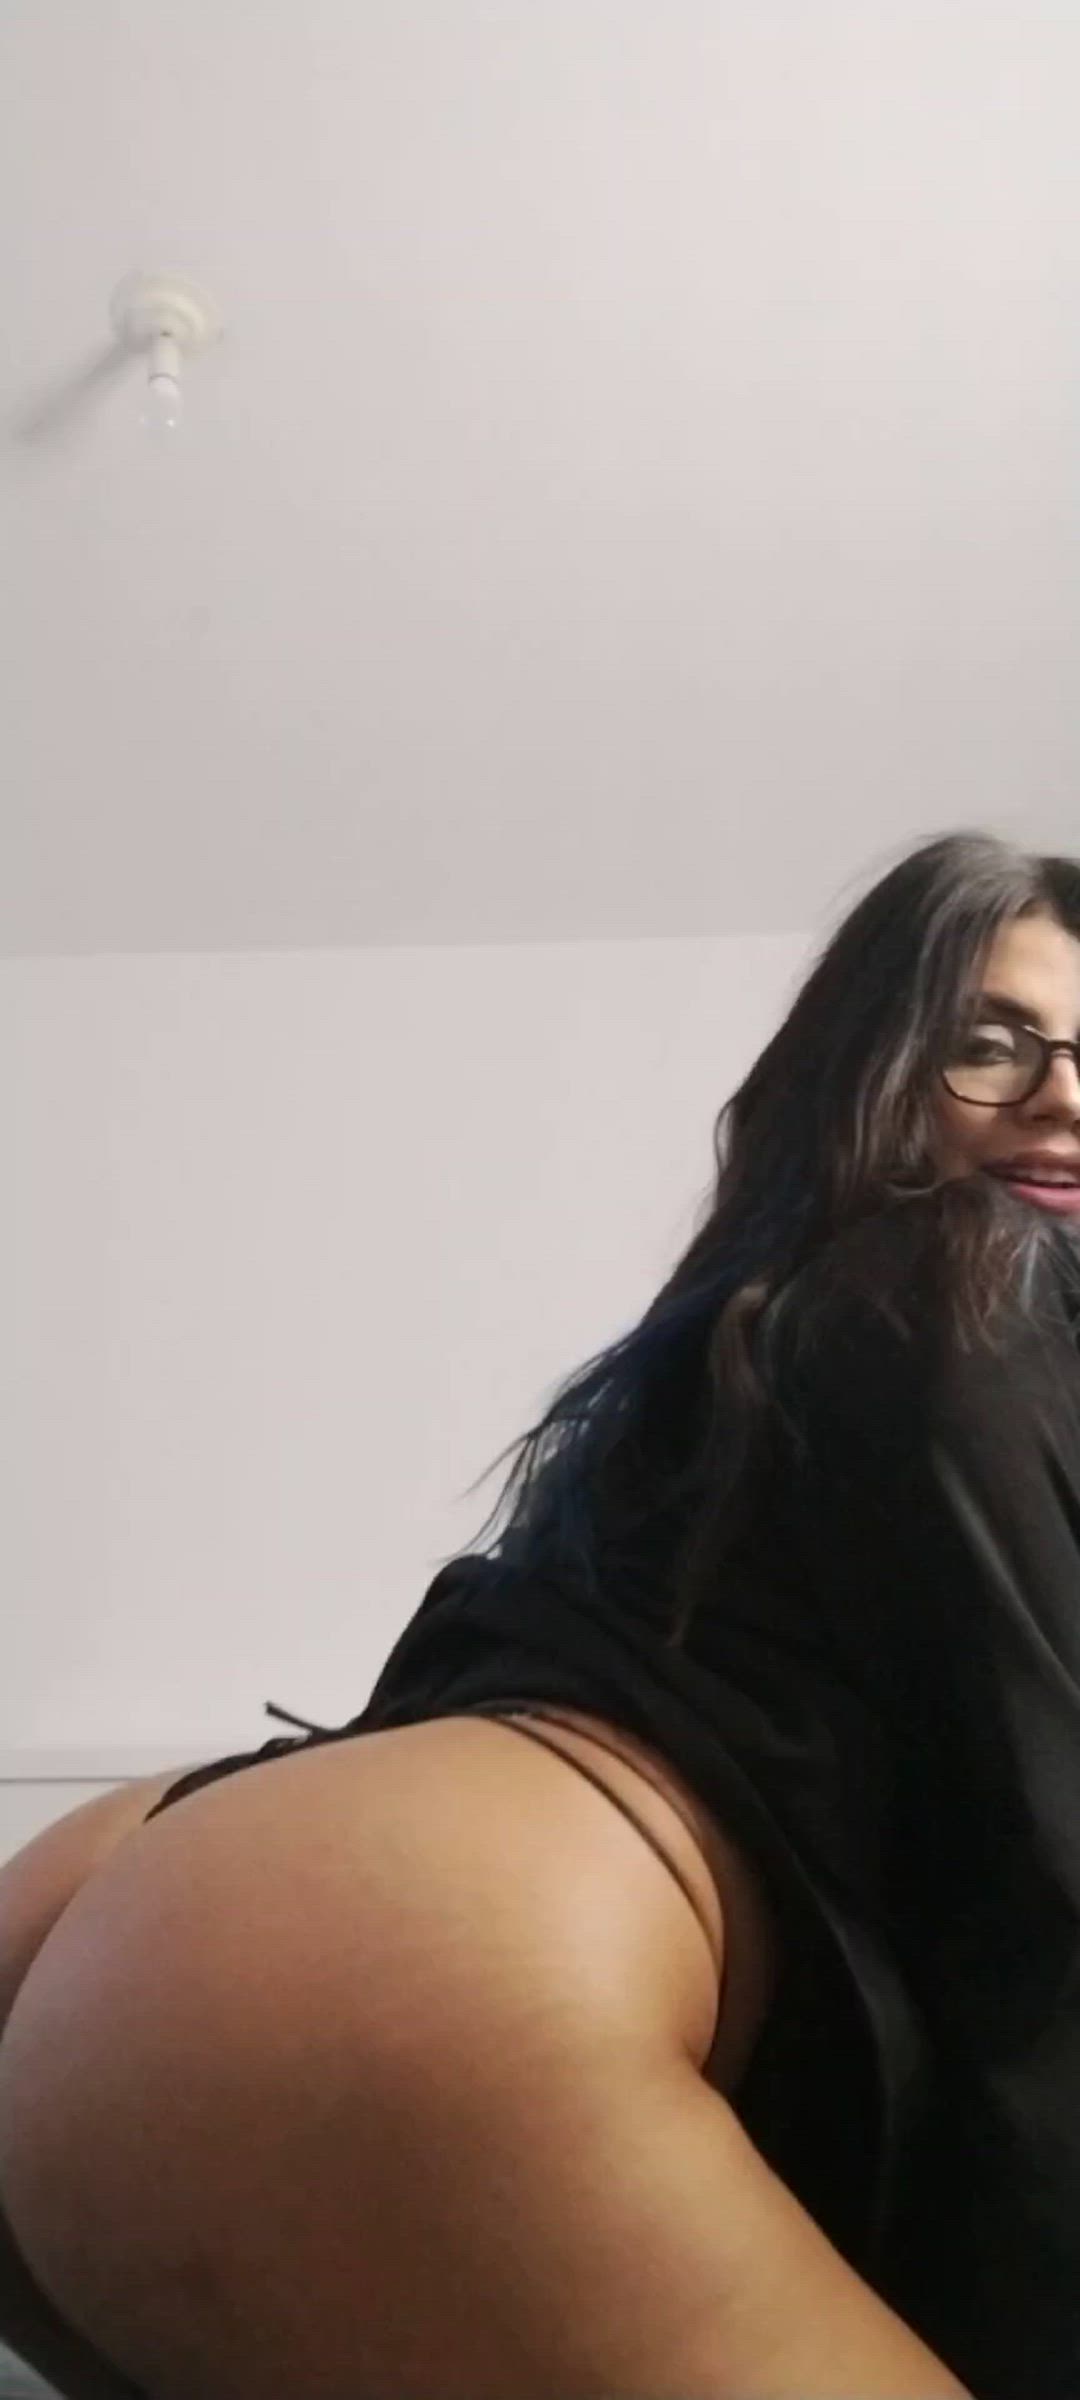 Ass porn video with onlyfans model goddeszarina <strong>@justmezarina</strong>